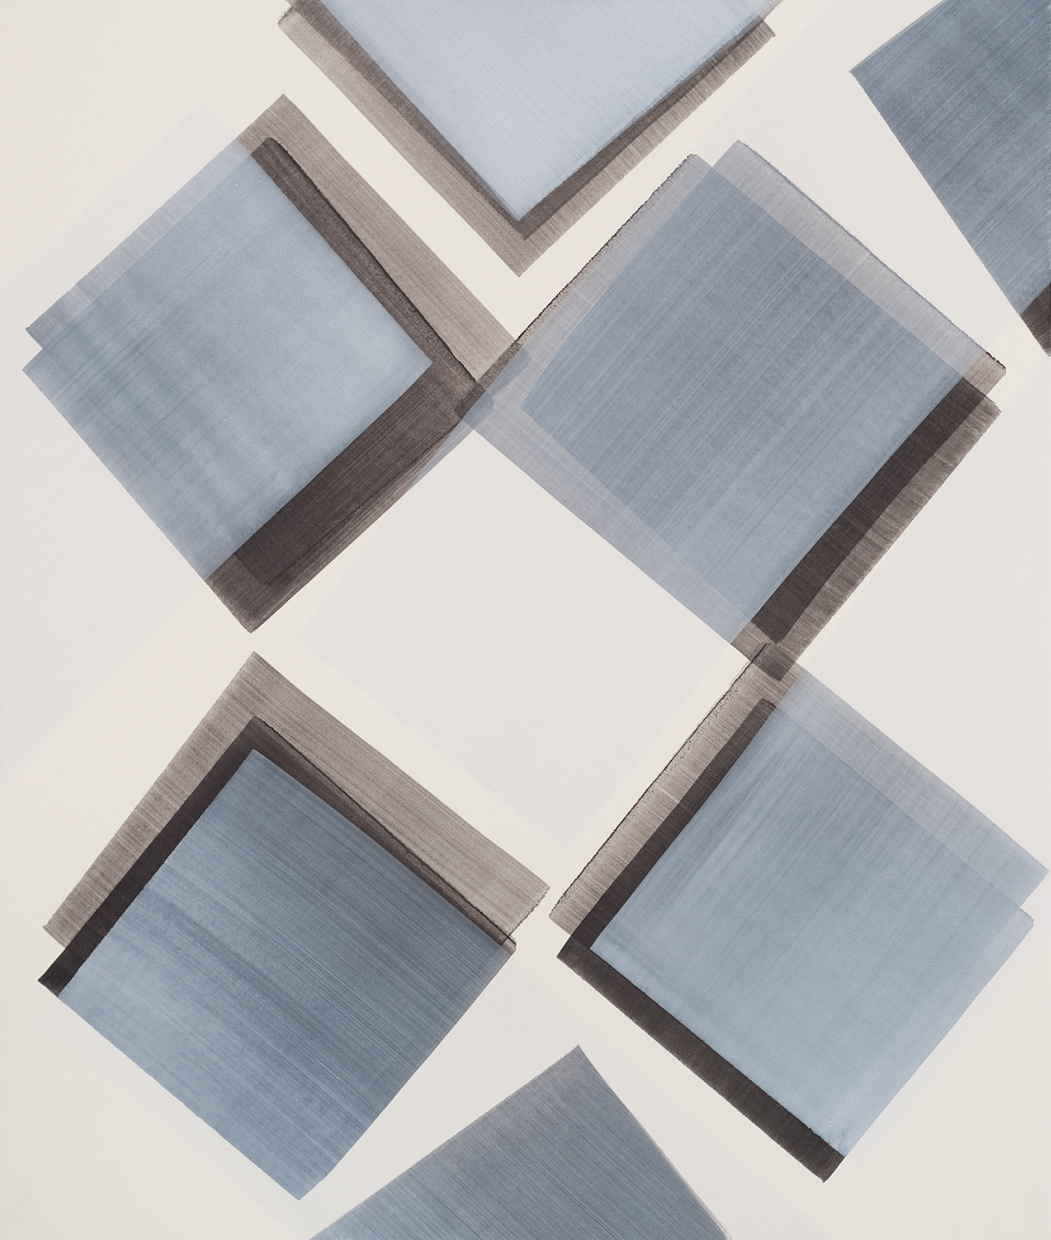 Nikola Dimitrov, Fuge, 2016, Pigment, Bindemittel, Lösungsmittel auf Bütten, je 105,5 x 89 cm